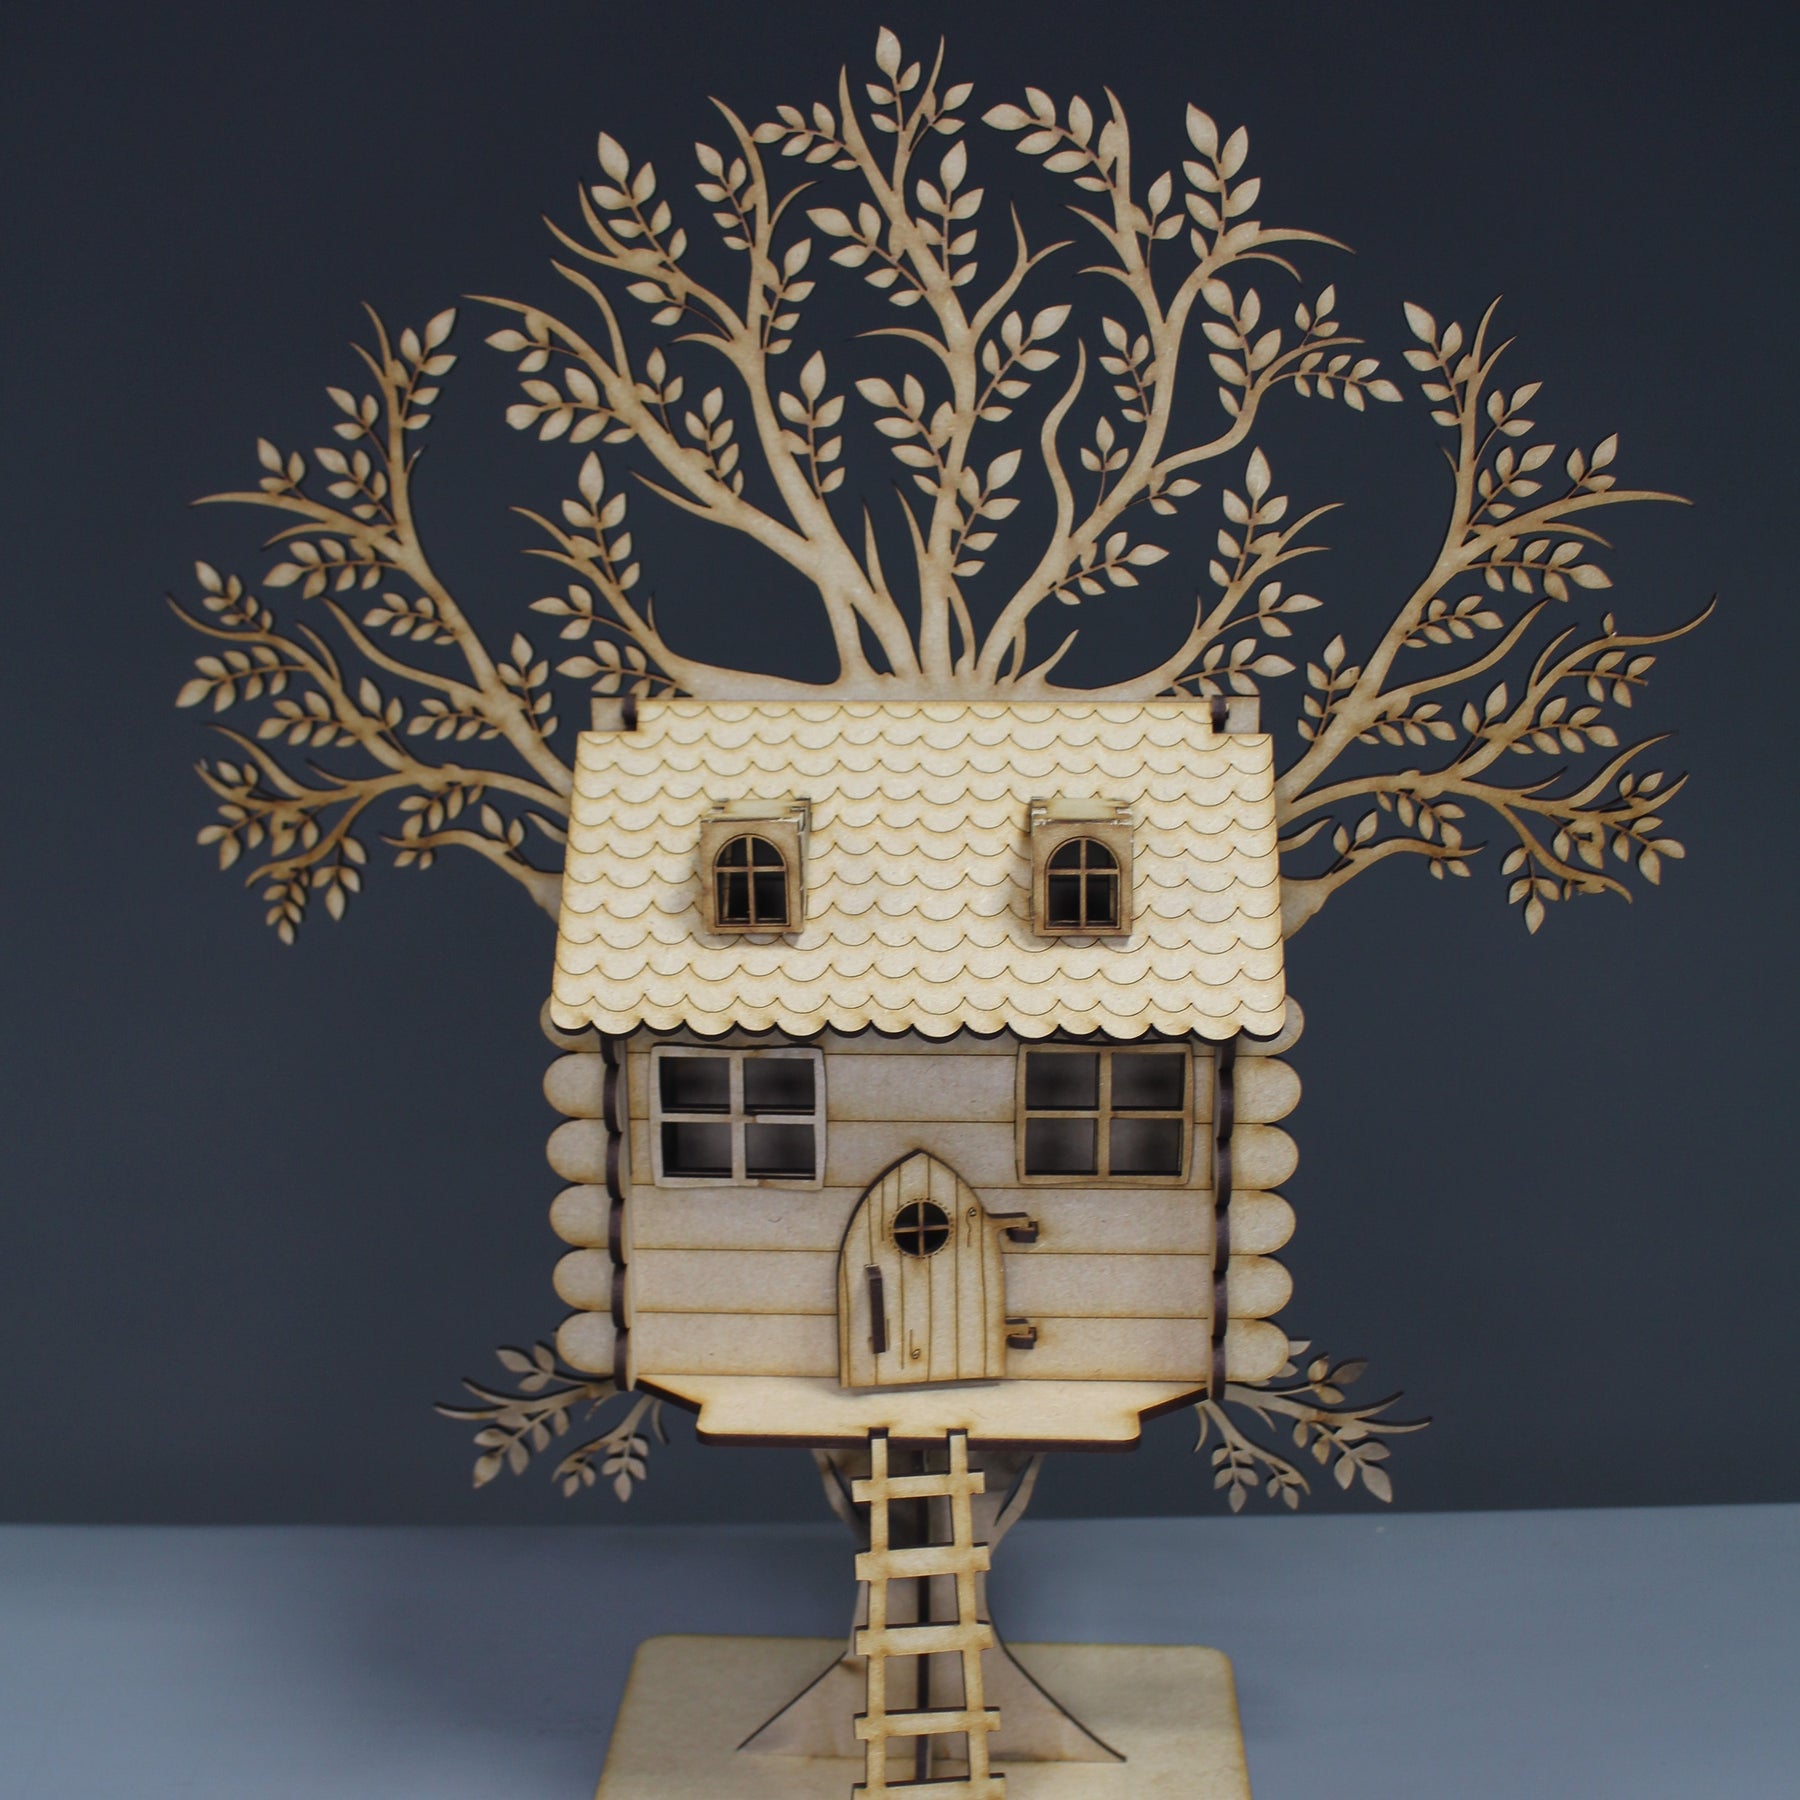 Mini Tree House Engraved DIY Craft Kit - Slate & Rose